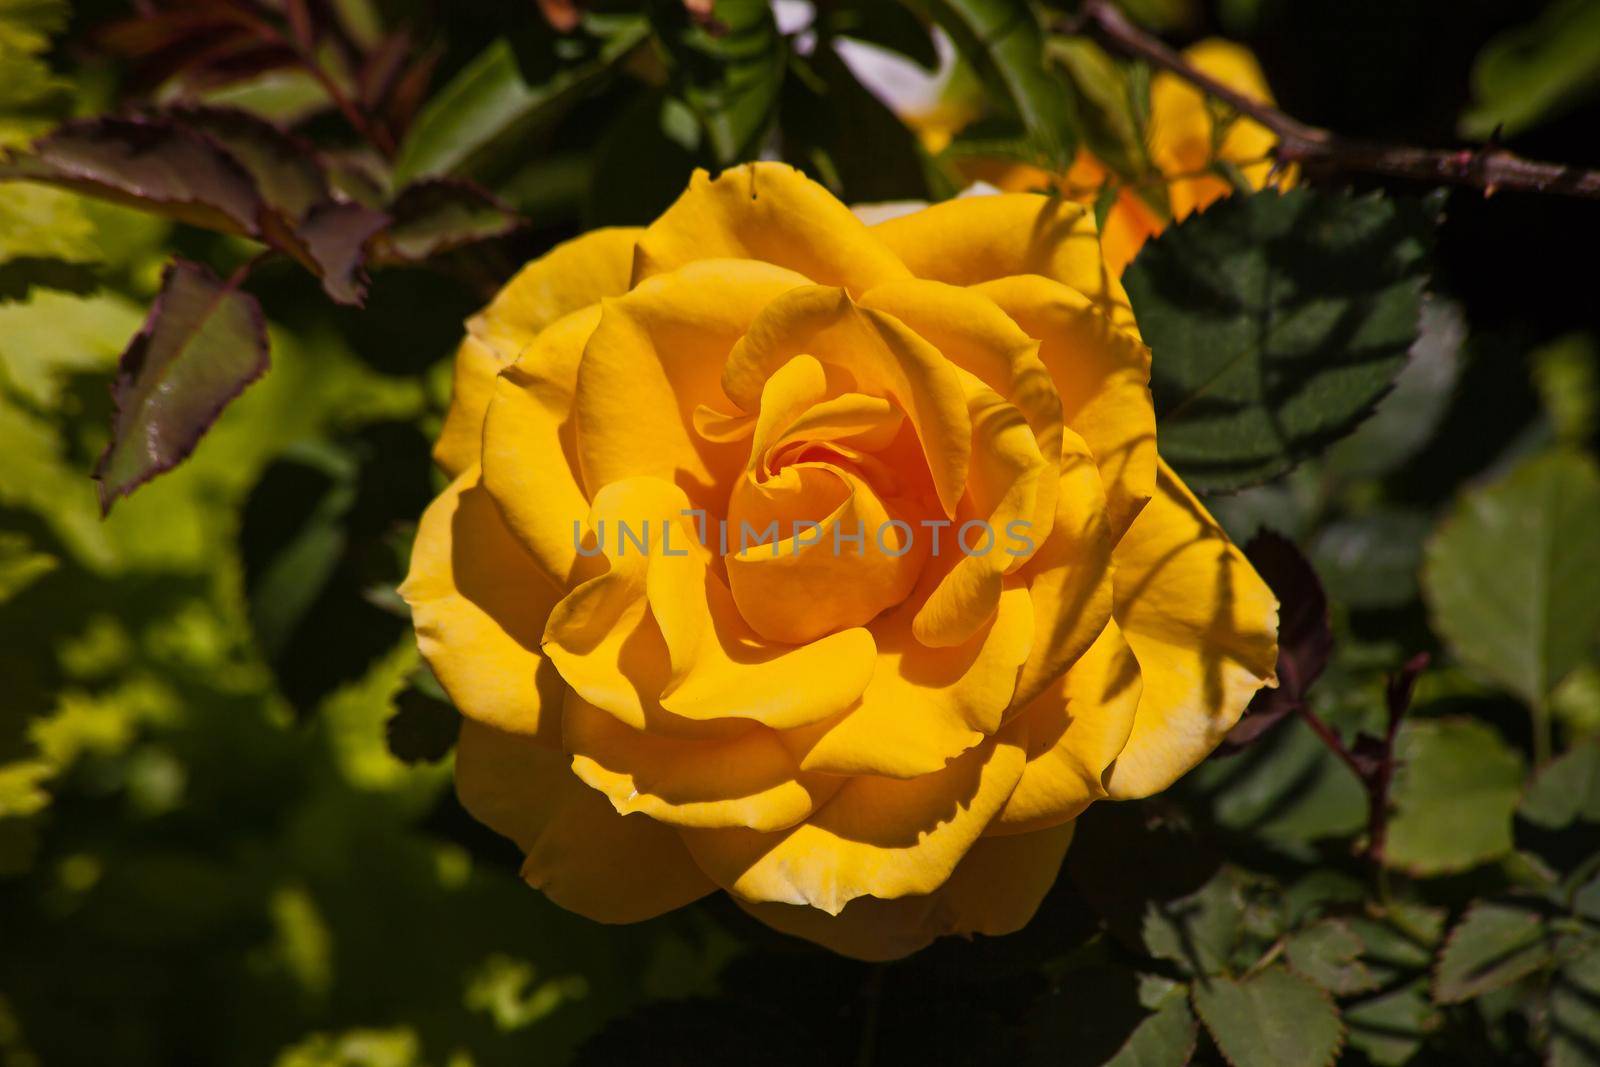 Close-up image of a eyllow rose